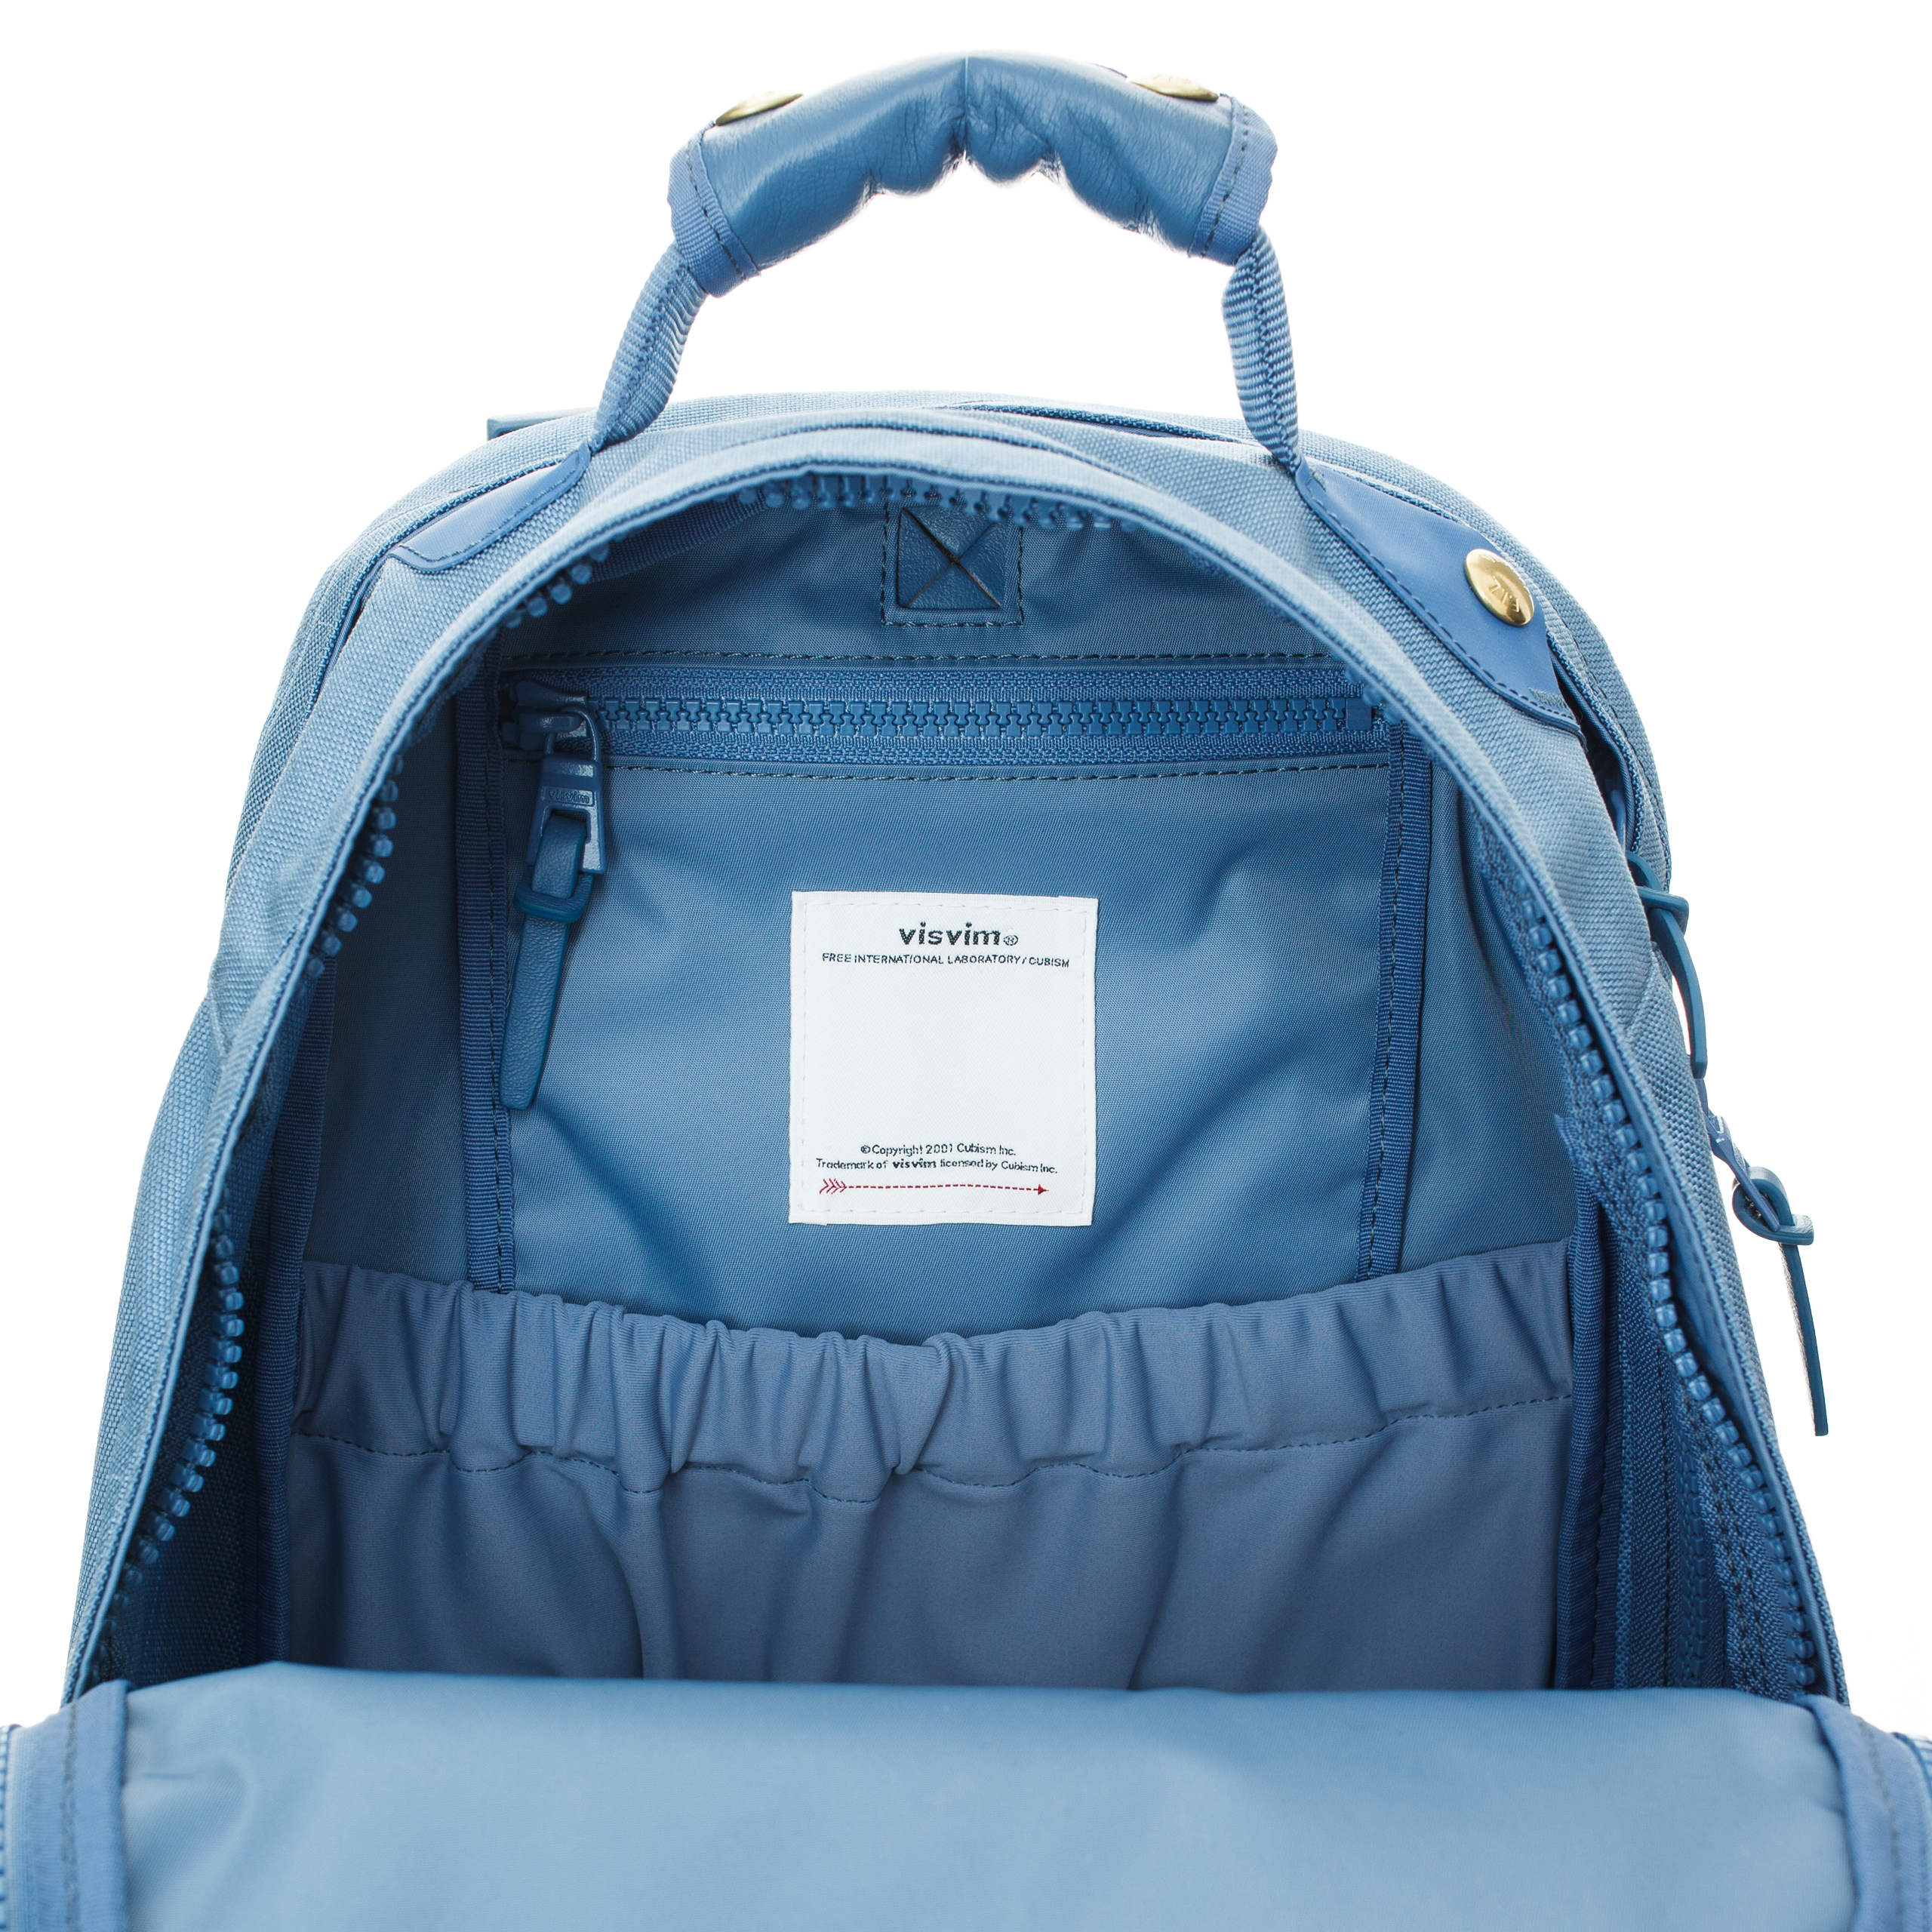 Синий рюкзак Cordura 22L visvim 0123103003032/BLUE, размер One Size 0123103003032/BLUE - фото 3